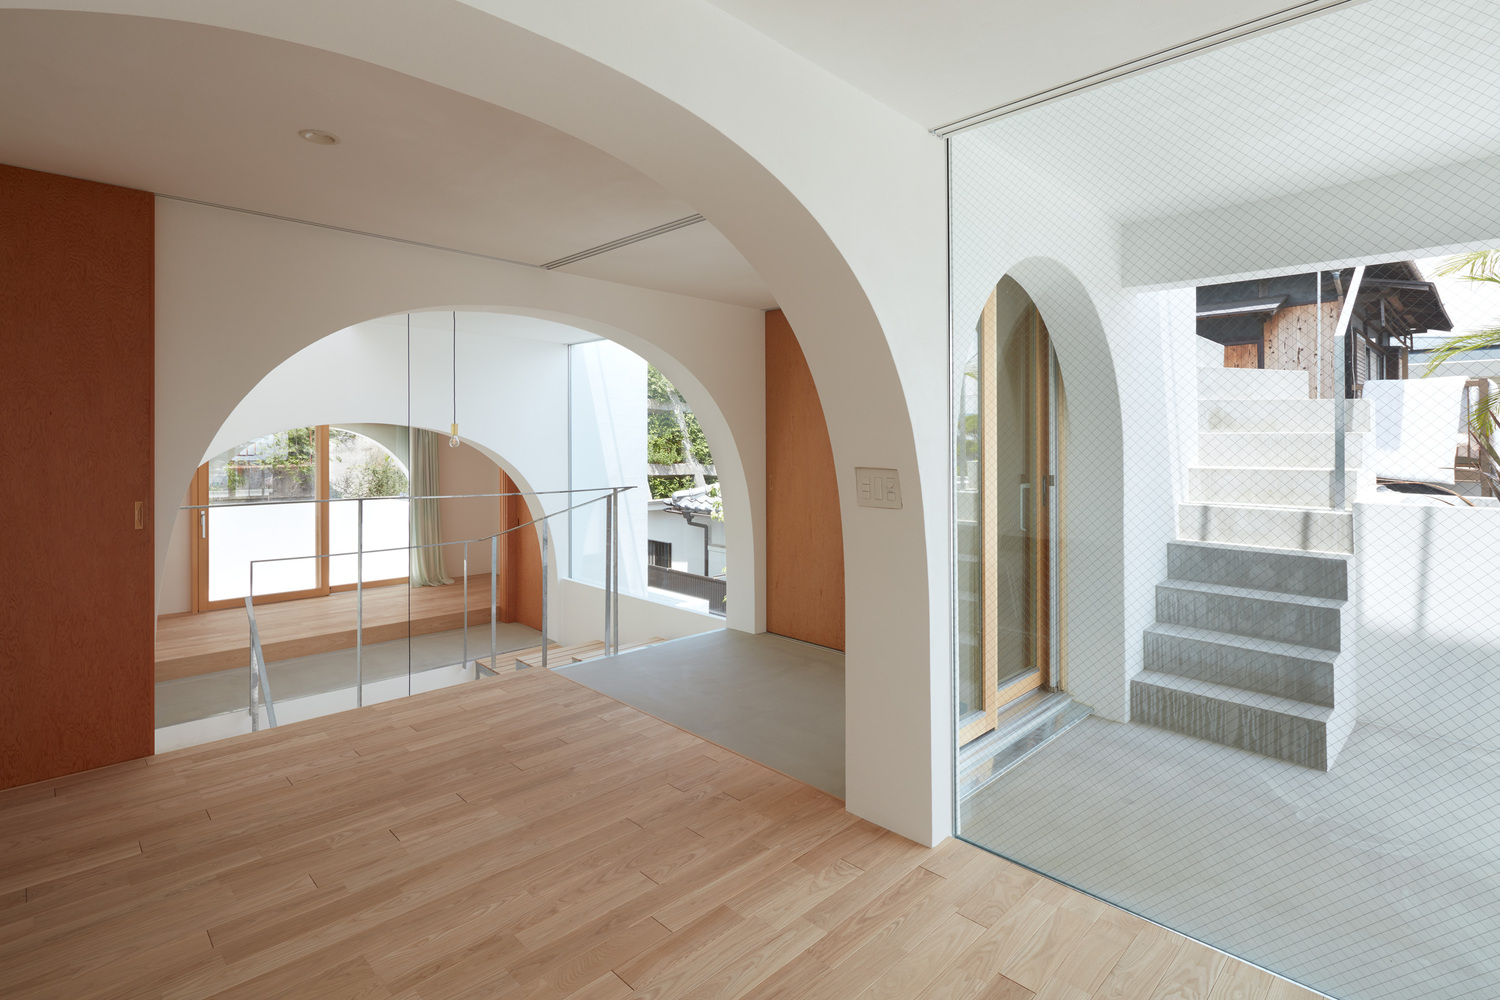 House in Tarumi by Tomohiro Hata Architect and Associates